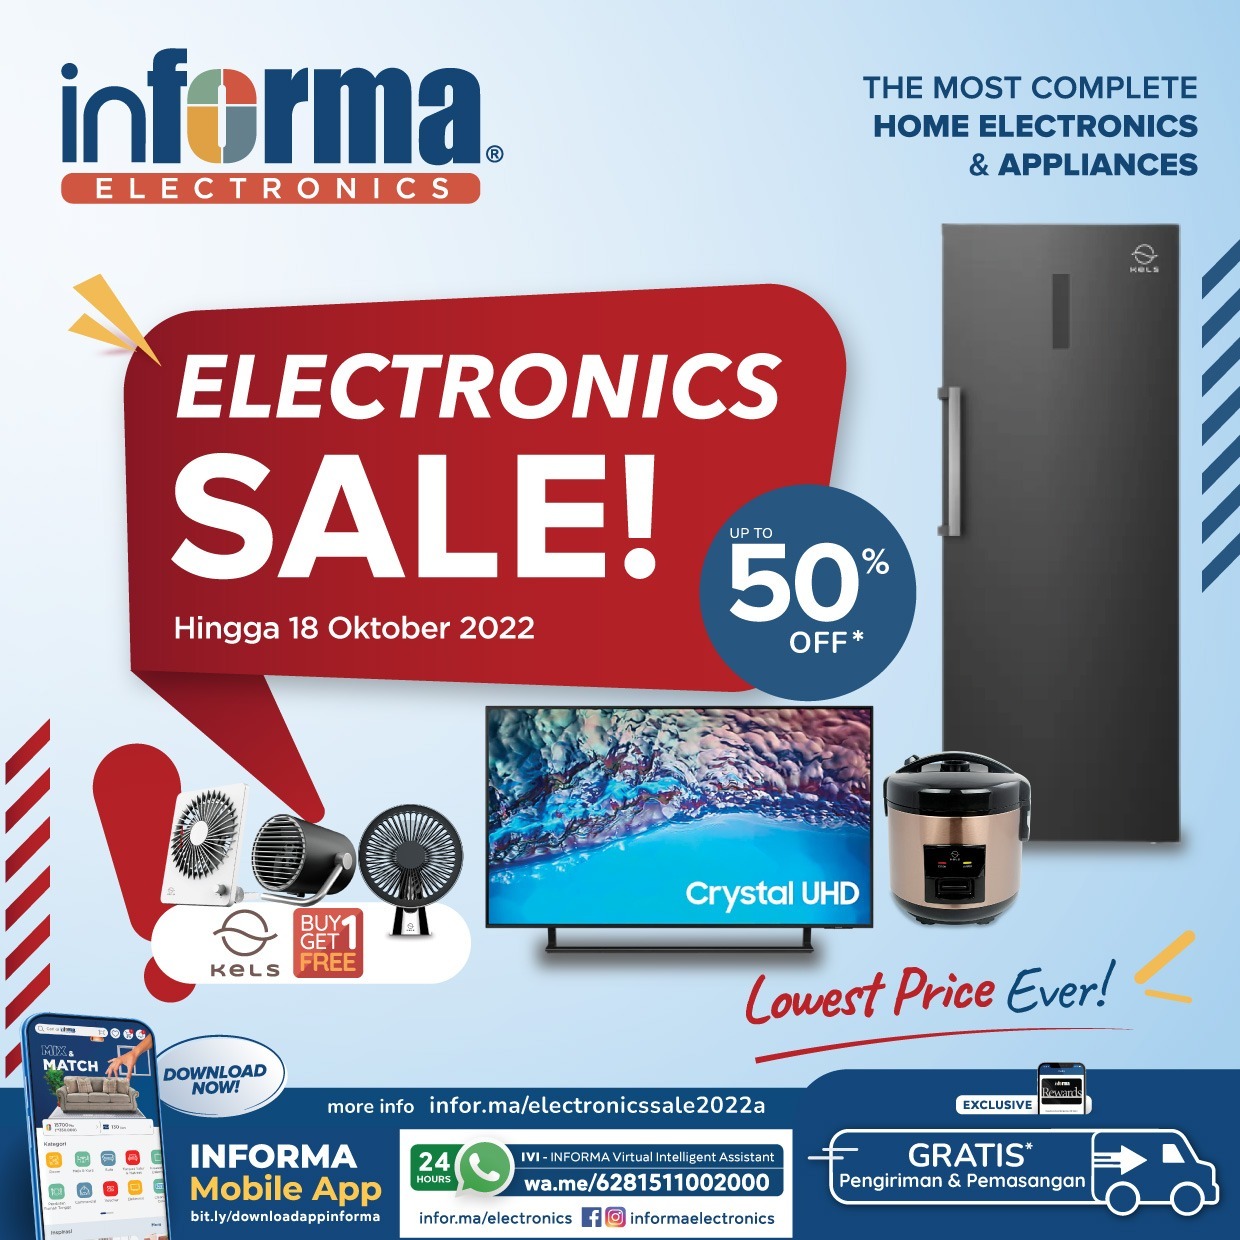 informa electronics sale up to 50%